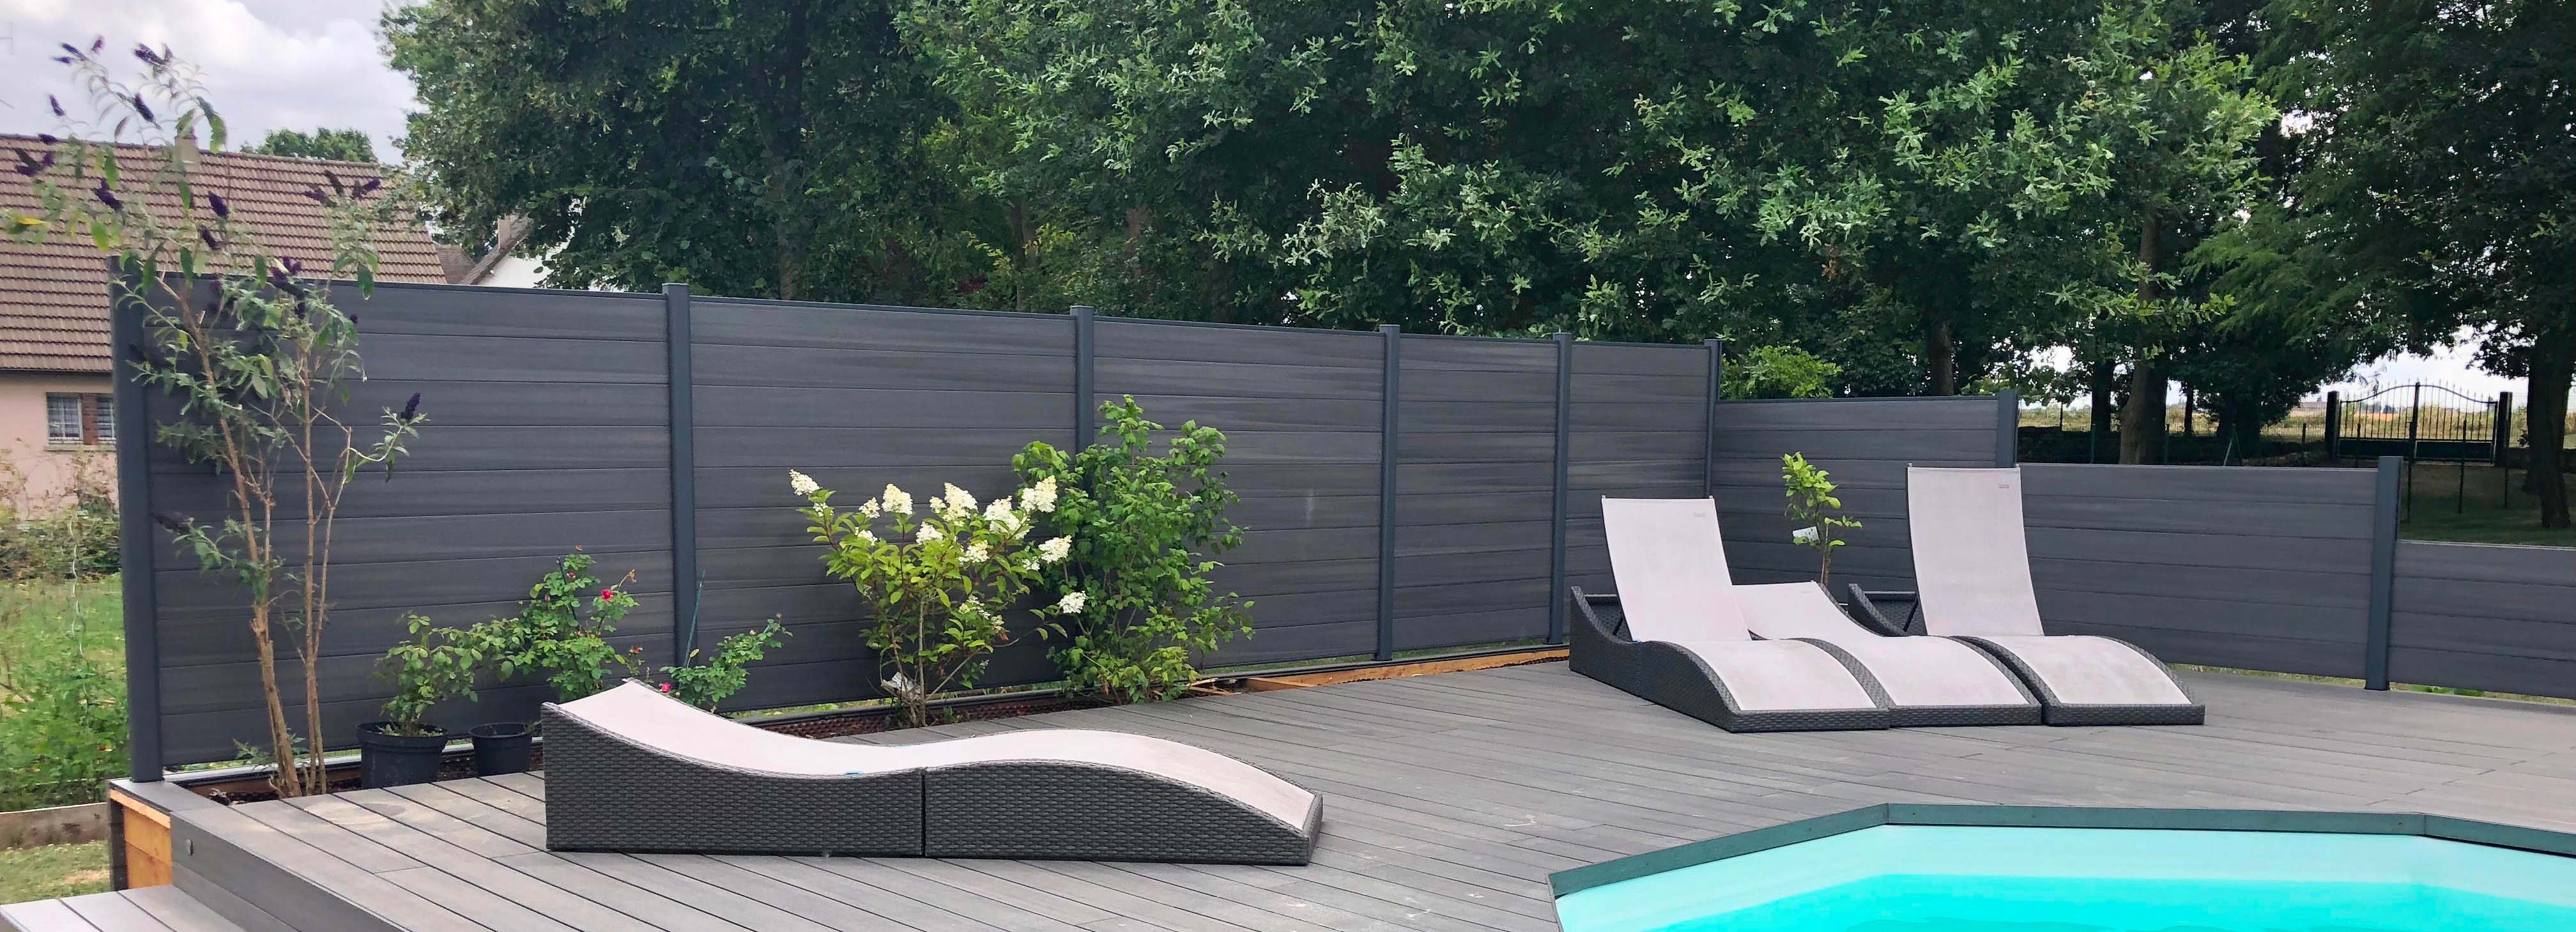 clôture de jardin en bois composite neowood teinte anthra